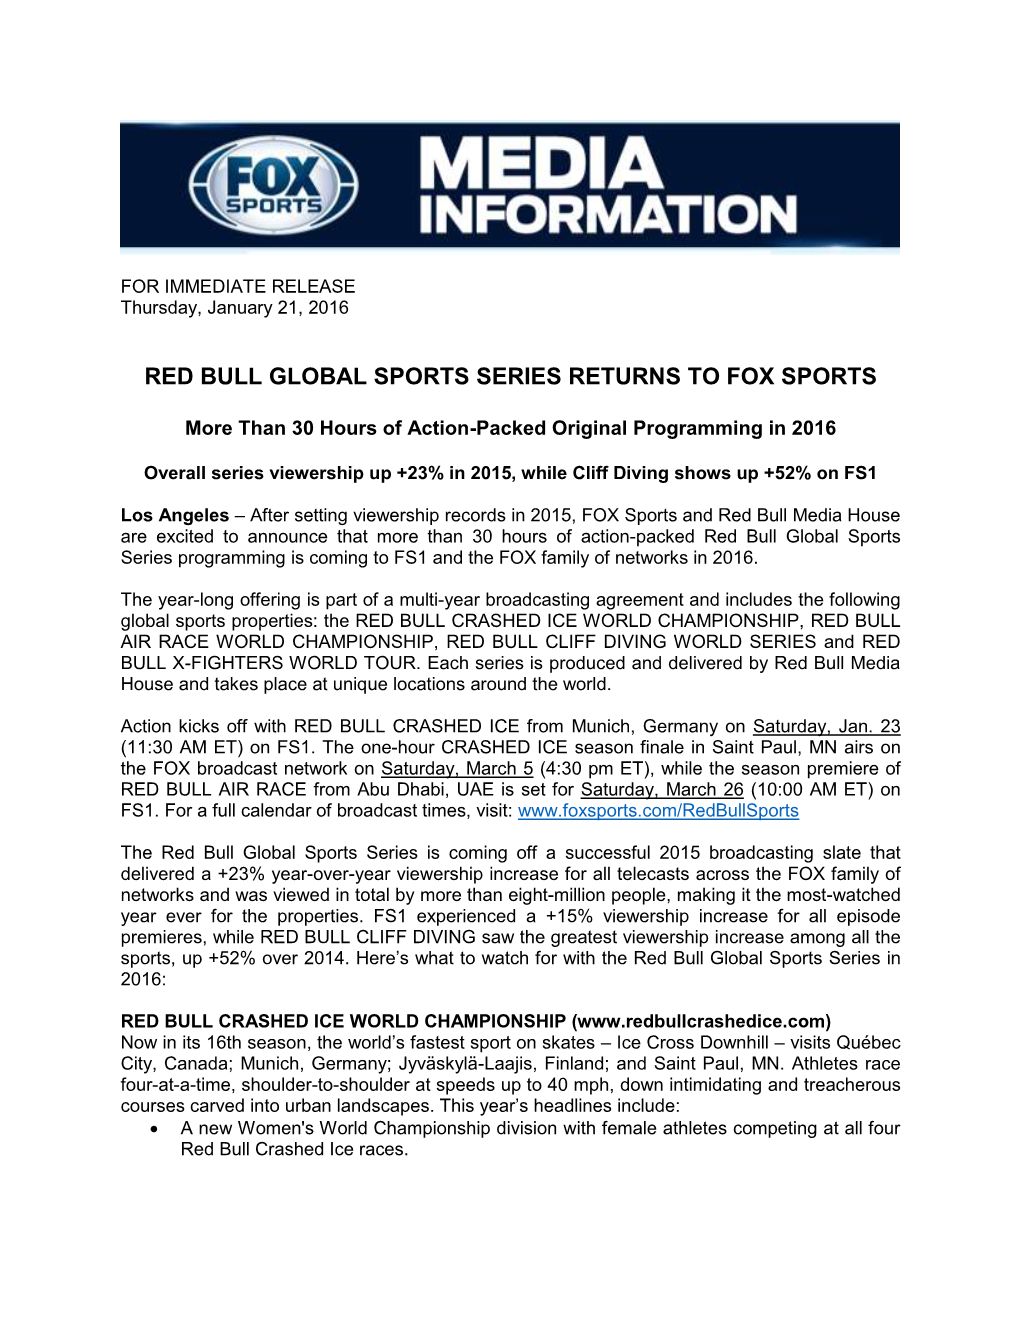 Red Bull Global Sports Series Returns to Fox Sports